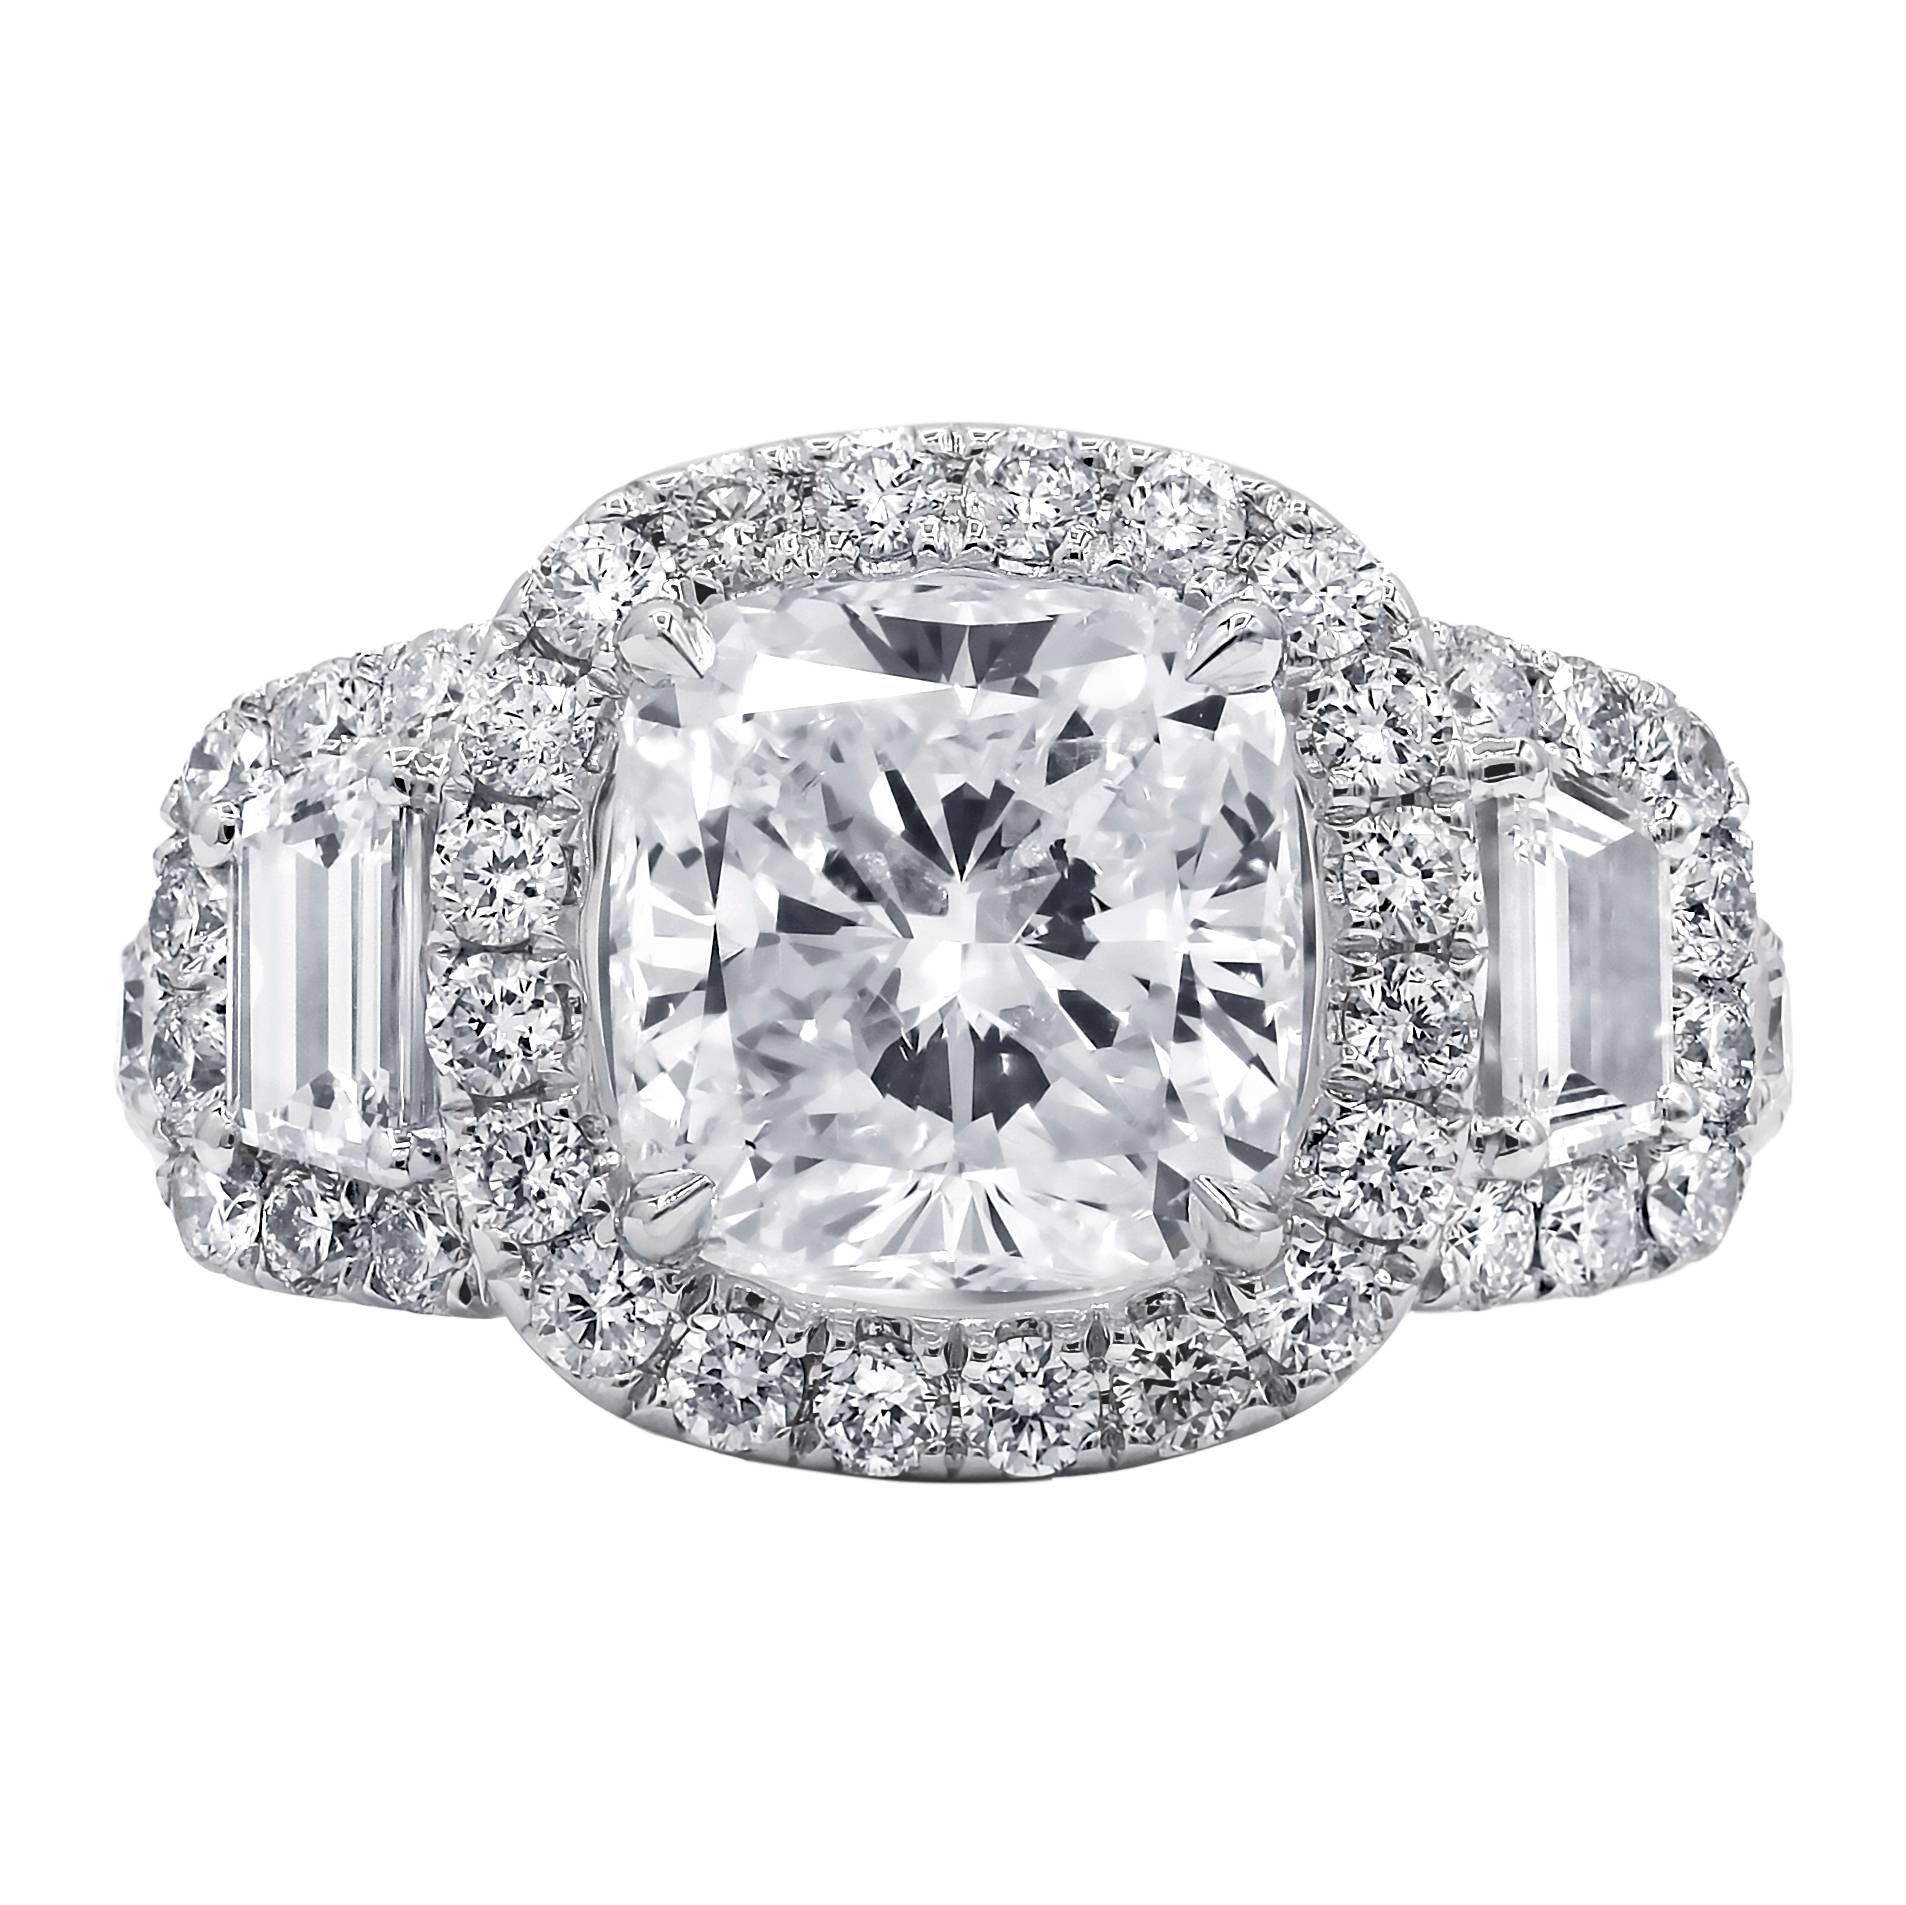 GIA Certified 3.05 Cushion Cut Diamond Engagement Ring